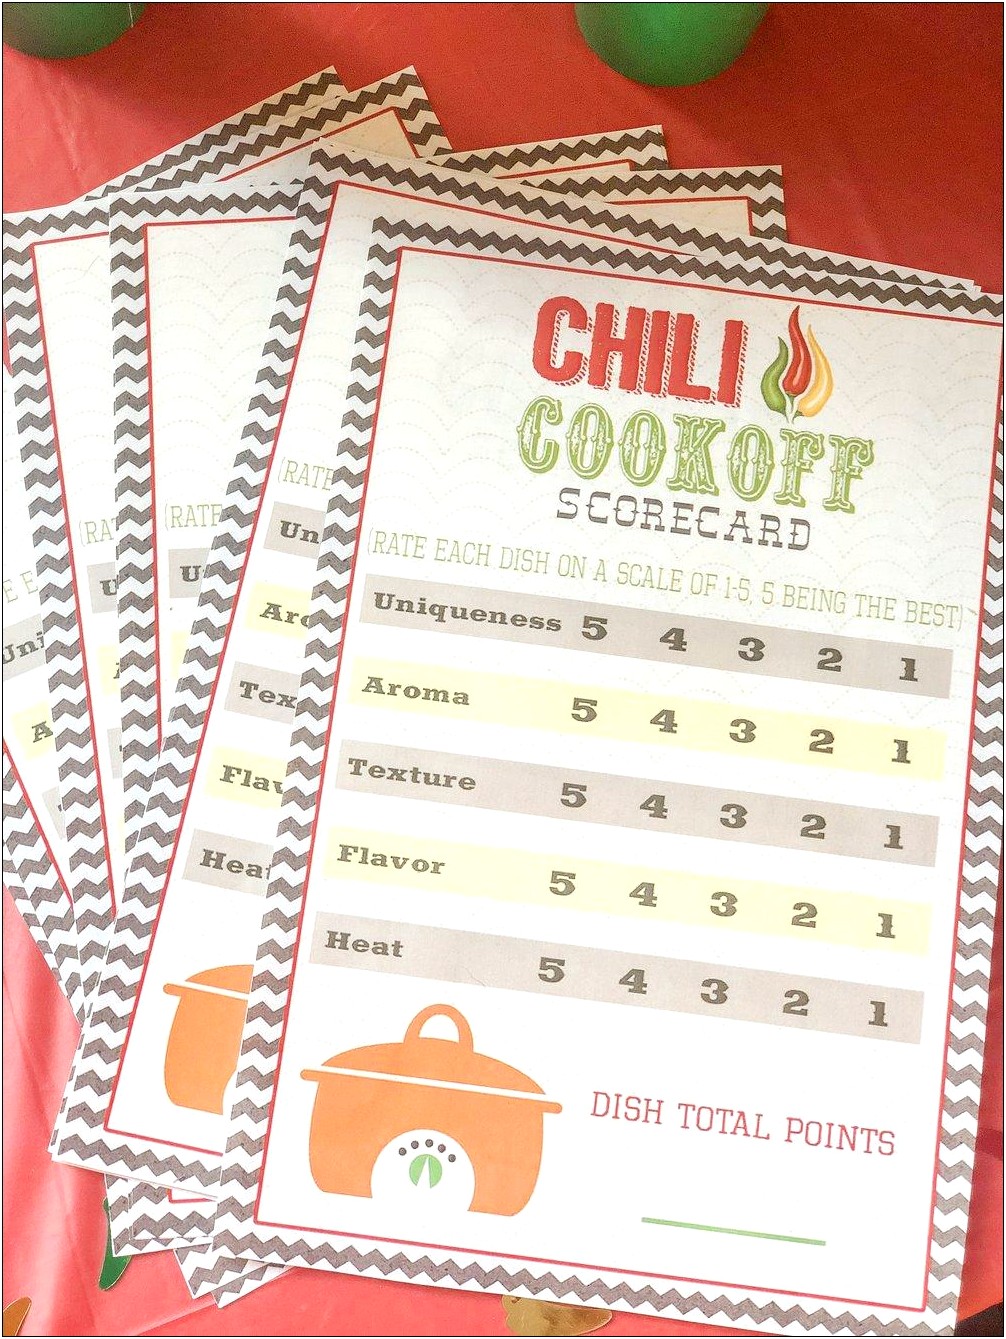 Free Chili Cook Off Scorecard Template